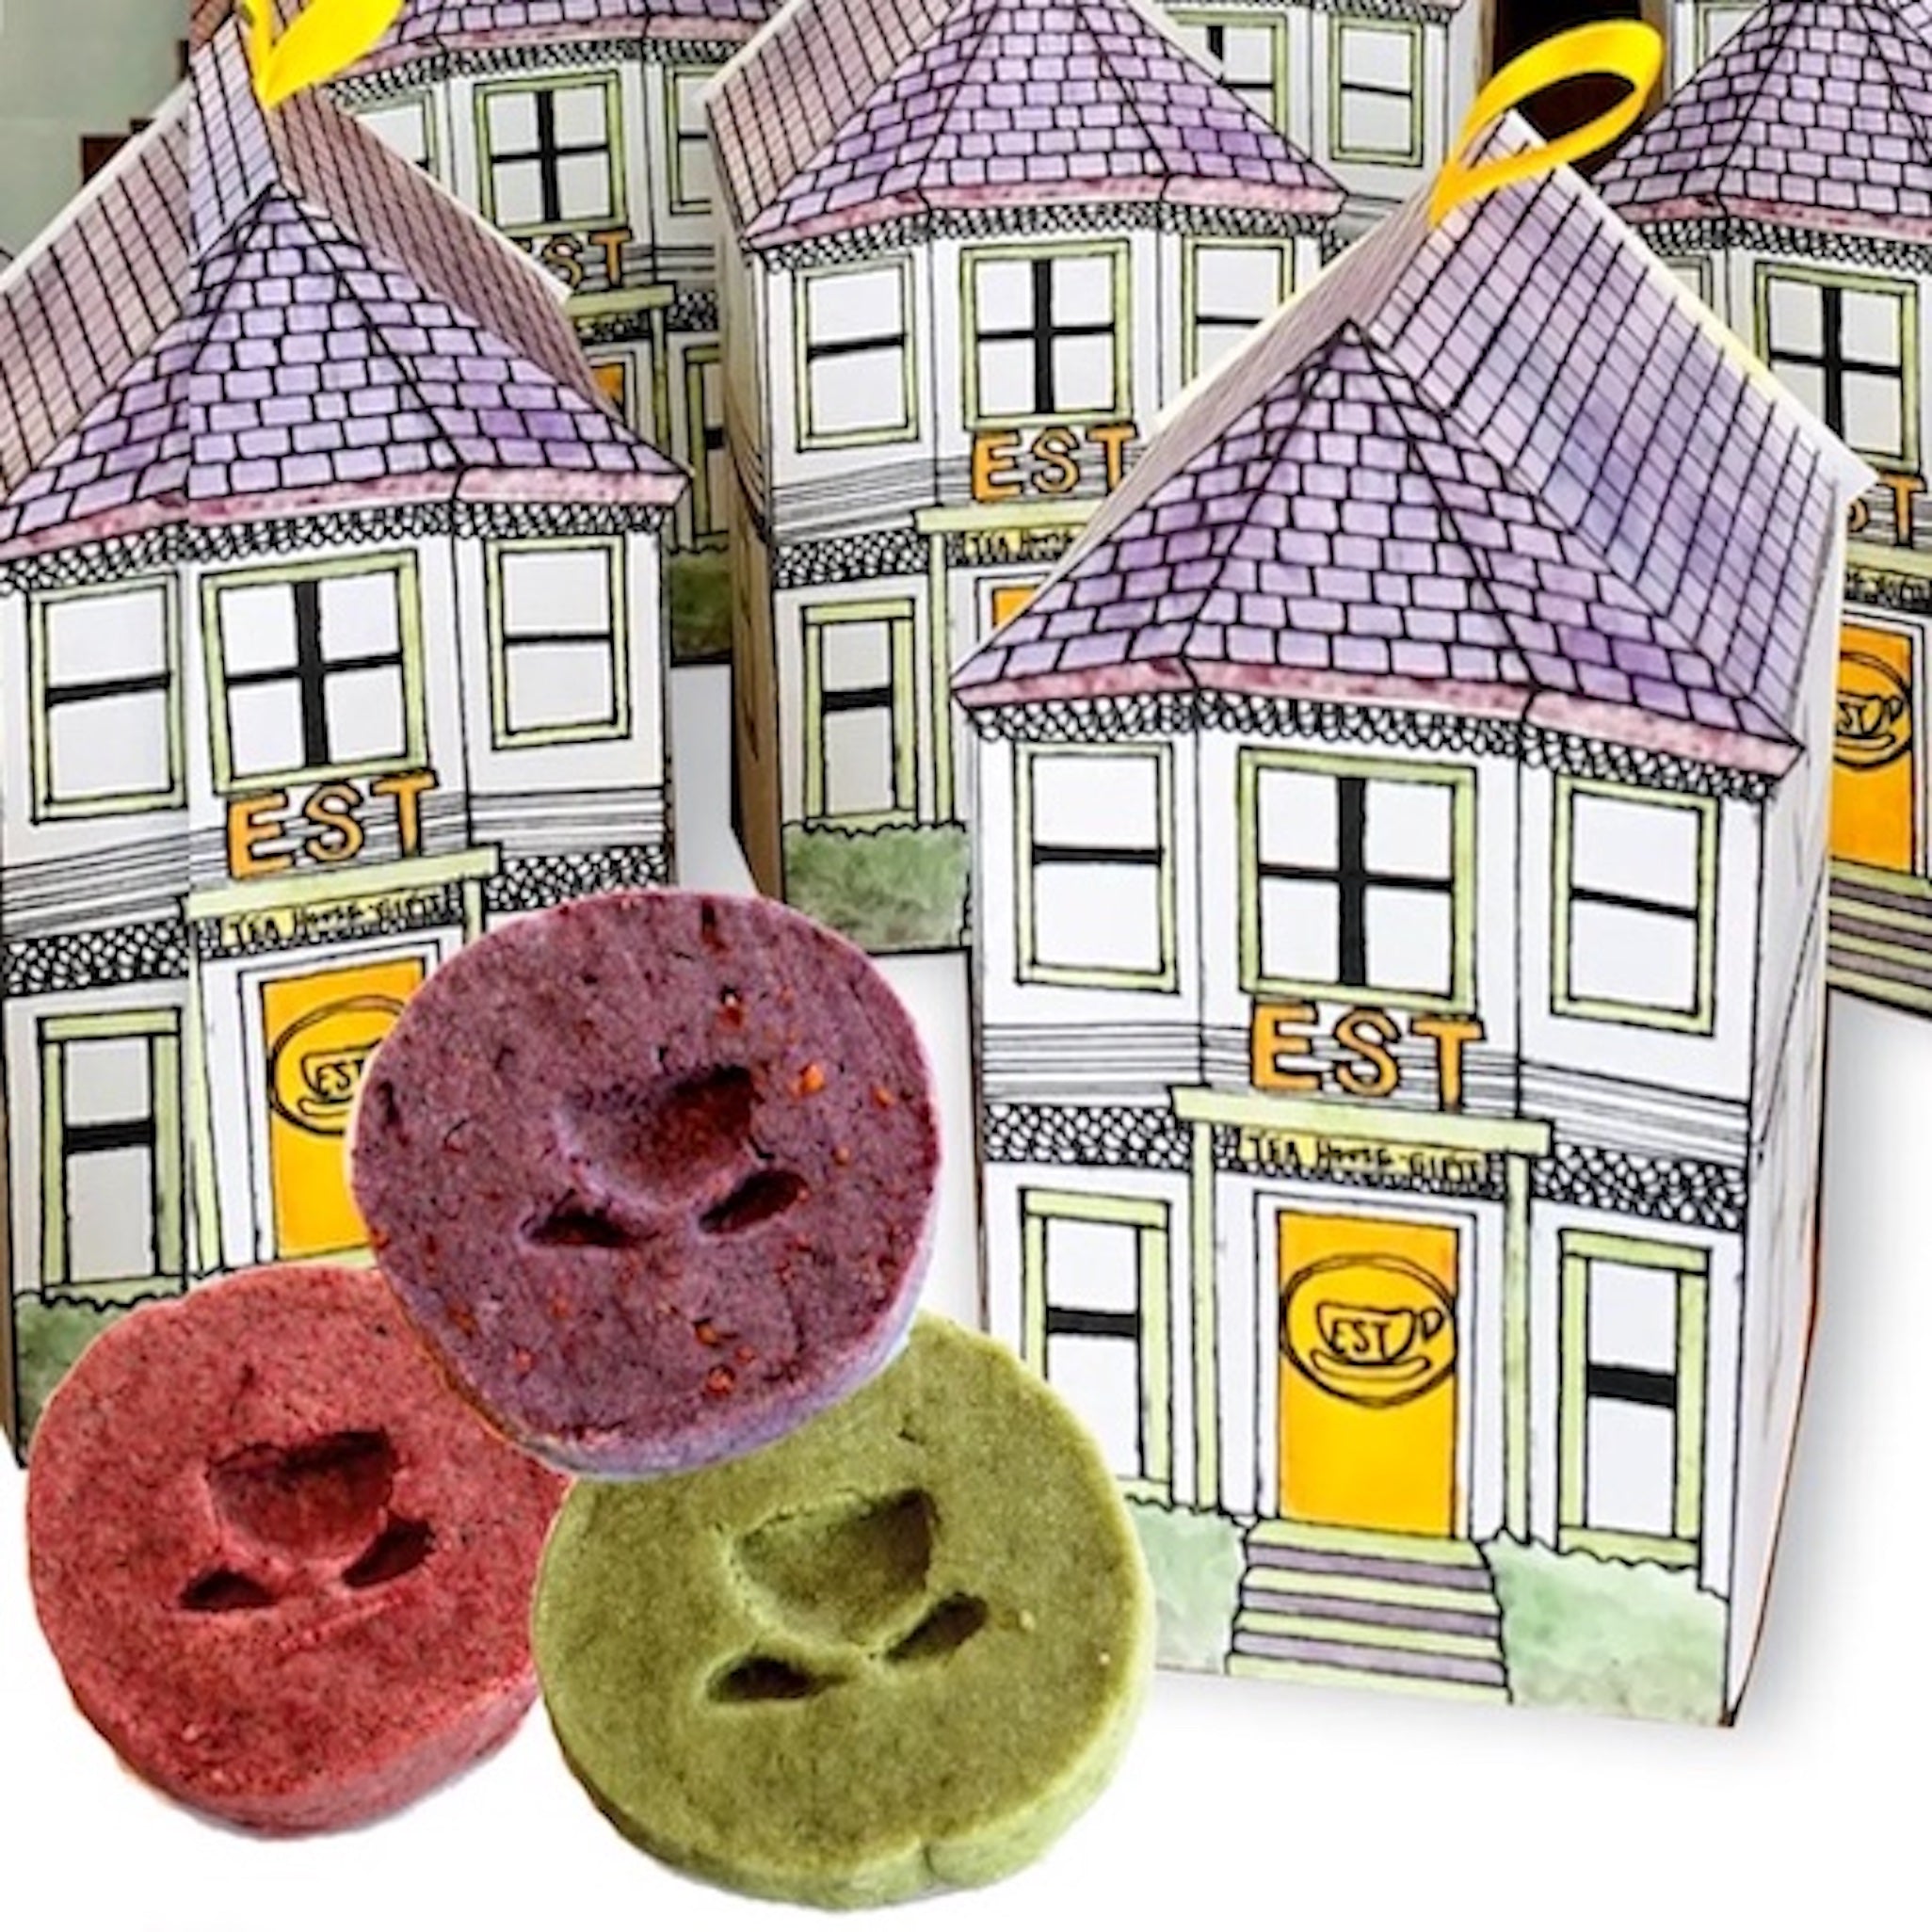 Shortbread Cookie House